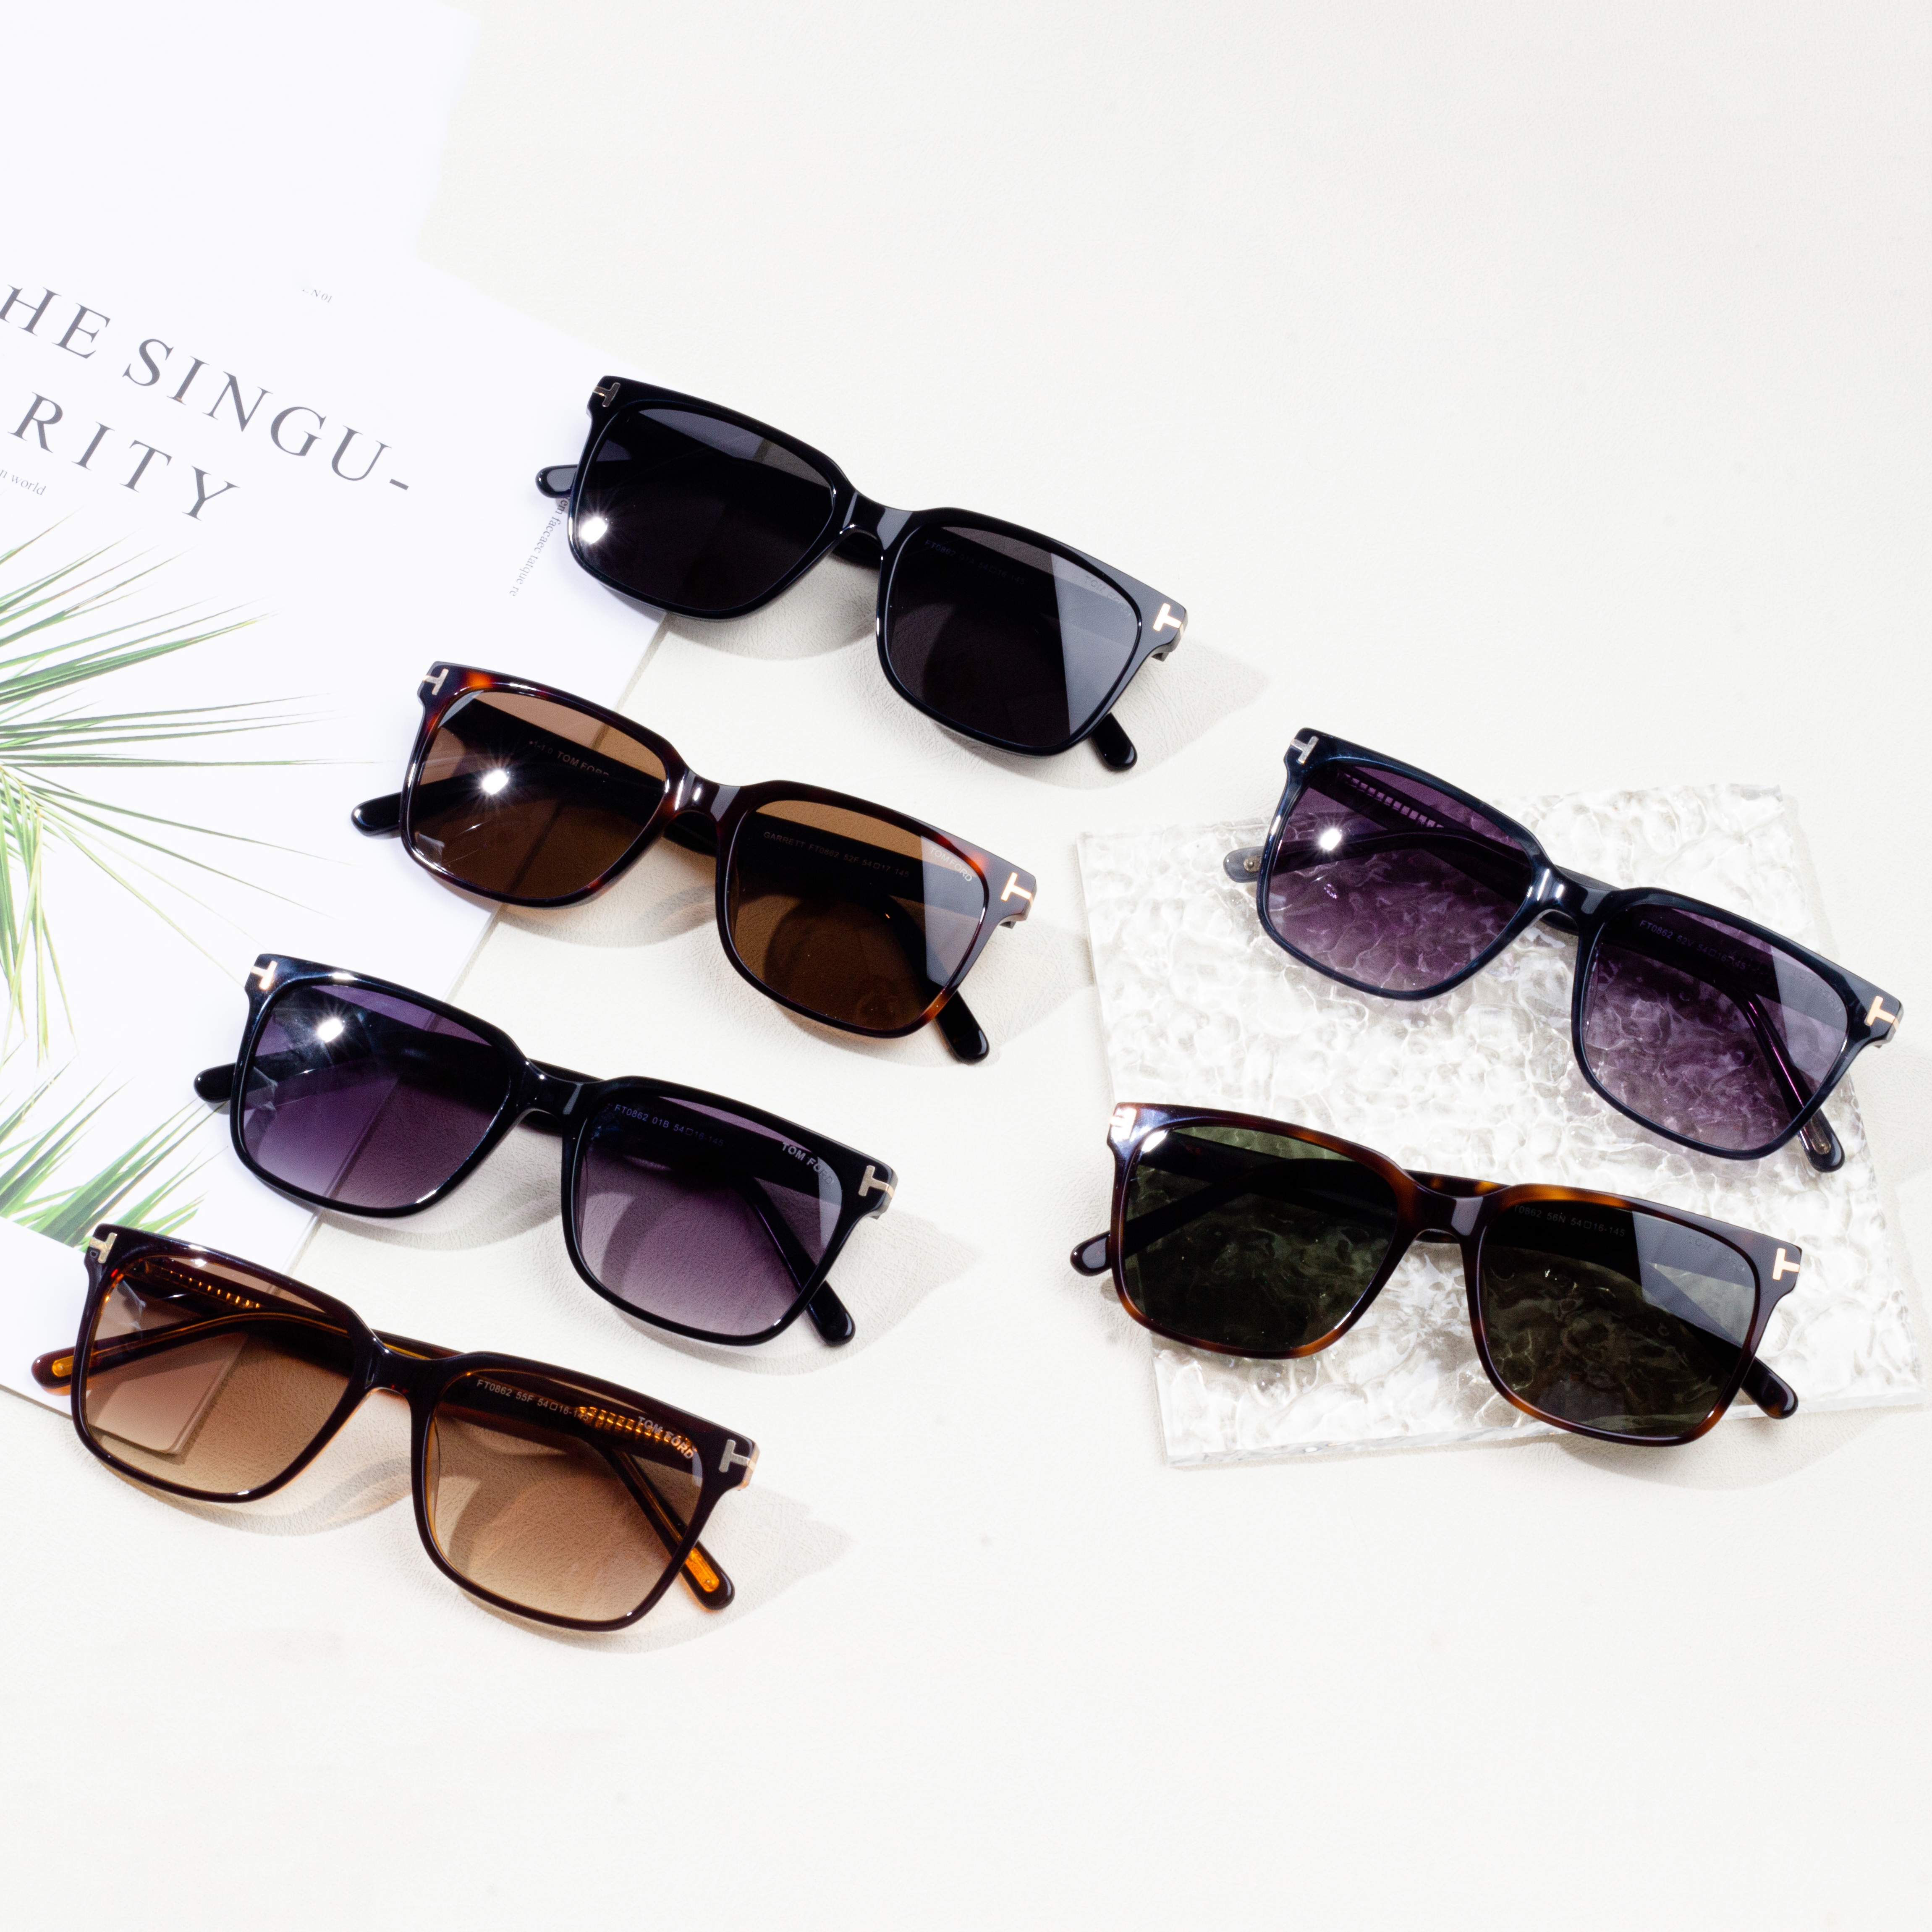 Vehivavy Sunglasses Fashion Sunglasses New Arrival Wholesales